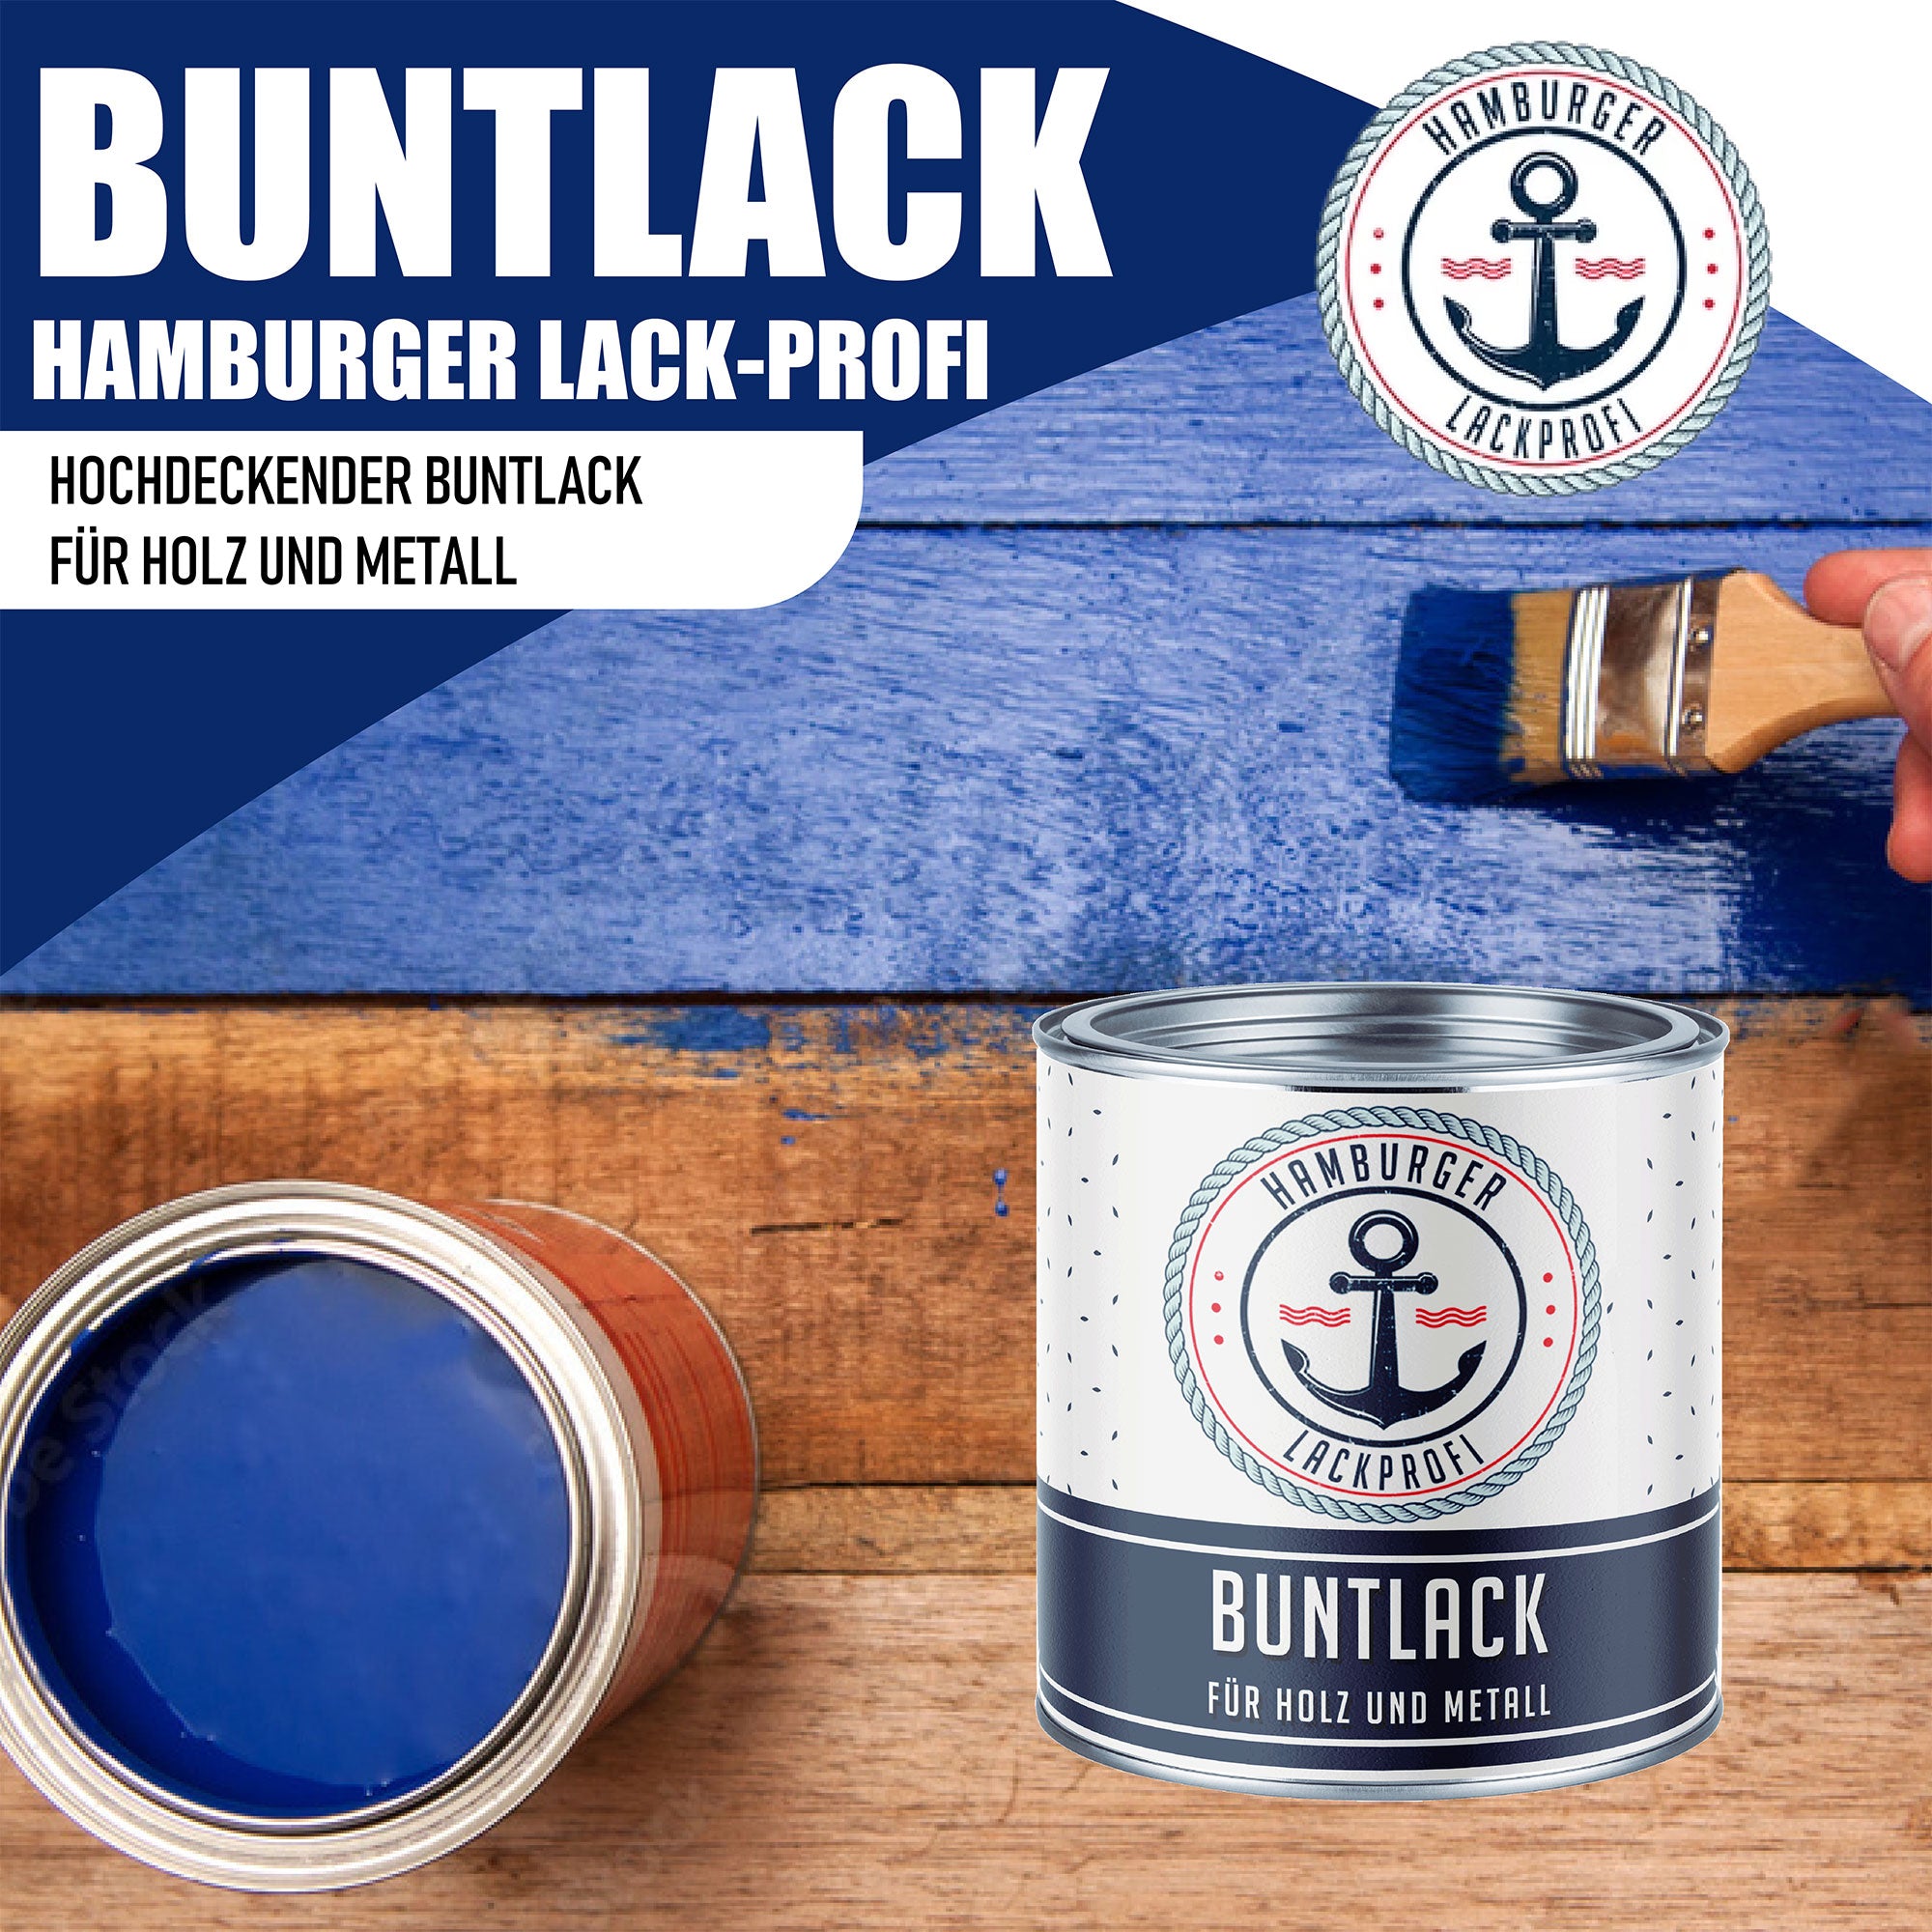 Hamburger Lack-Profi Buntlack Tomatenrot  RAL 3013 - Robuster Kunstharzlack